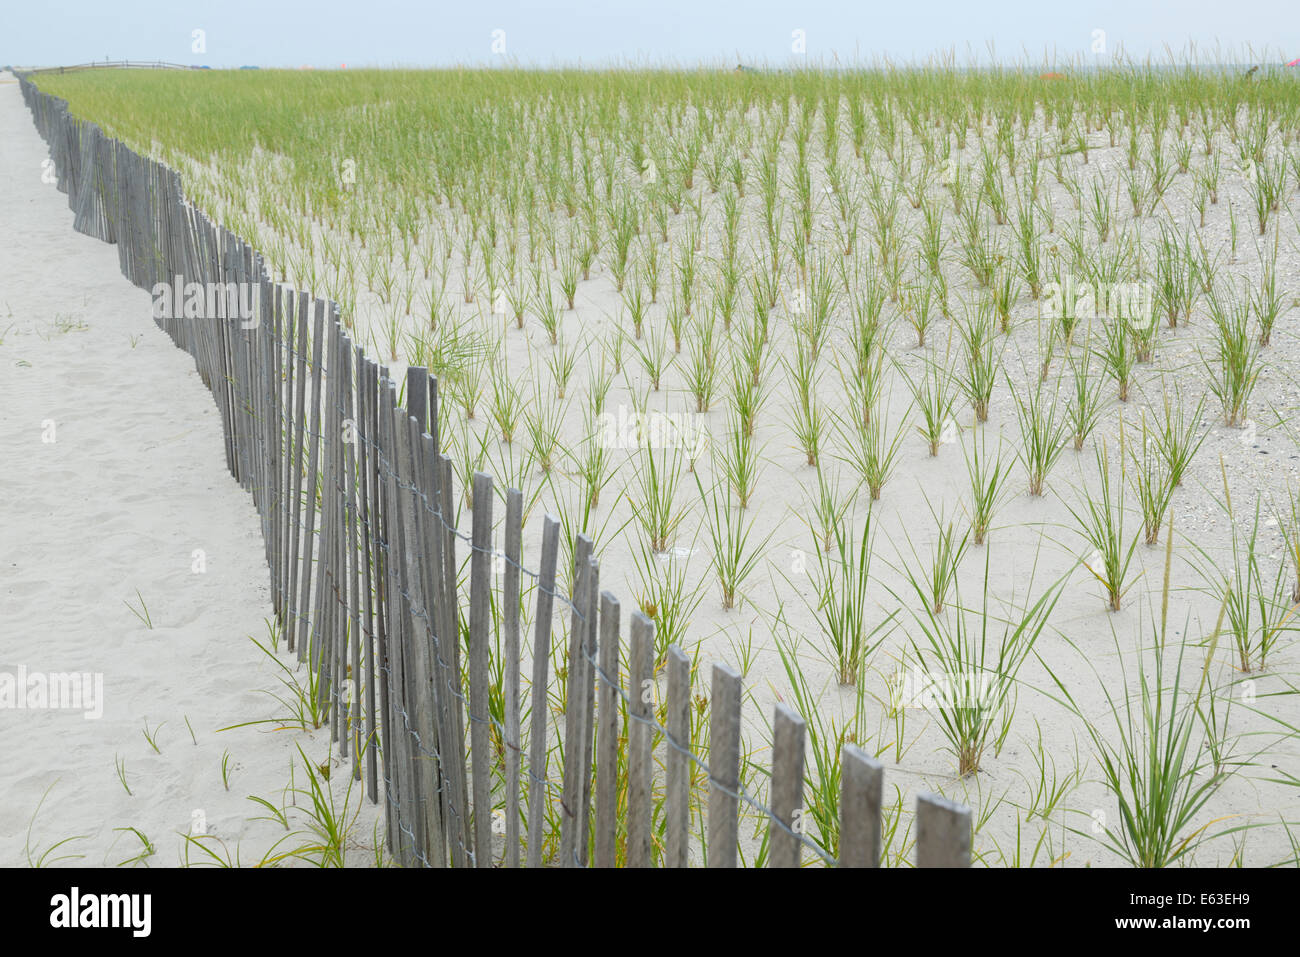 Cape American beach grass, Ammophila breviligulata, planted to stabilize the dunes and prevent beach erosion Stock Photo